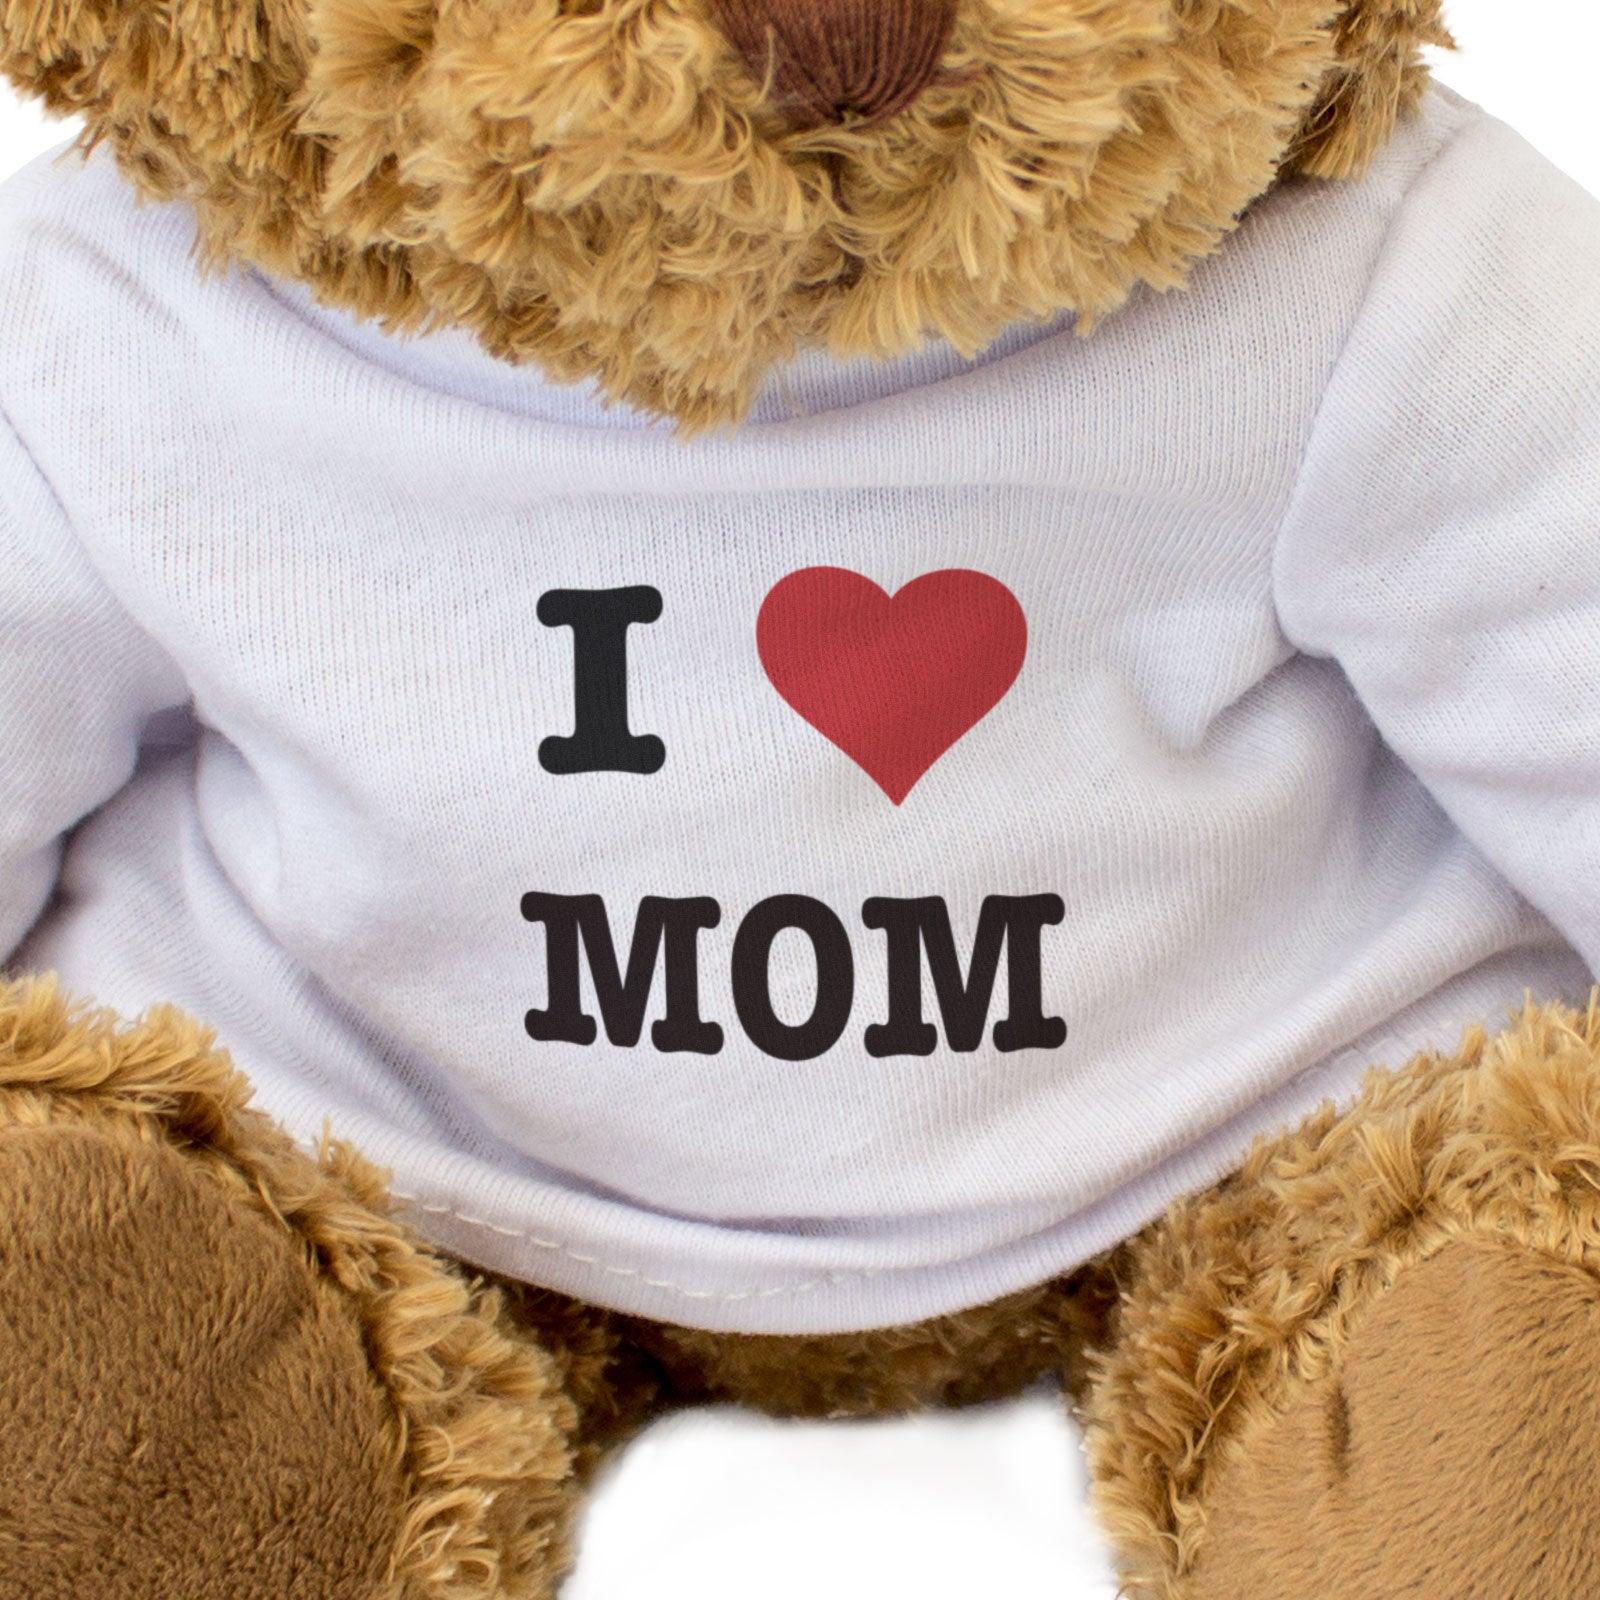 I Love Mom Teddy Bear